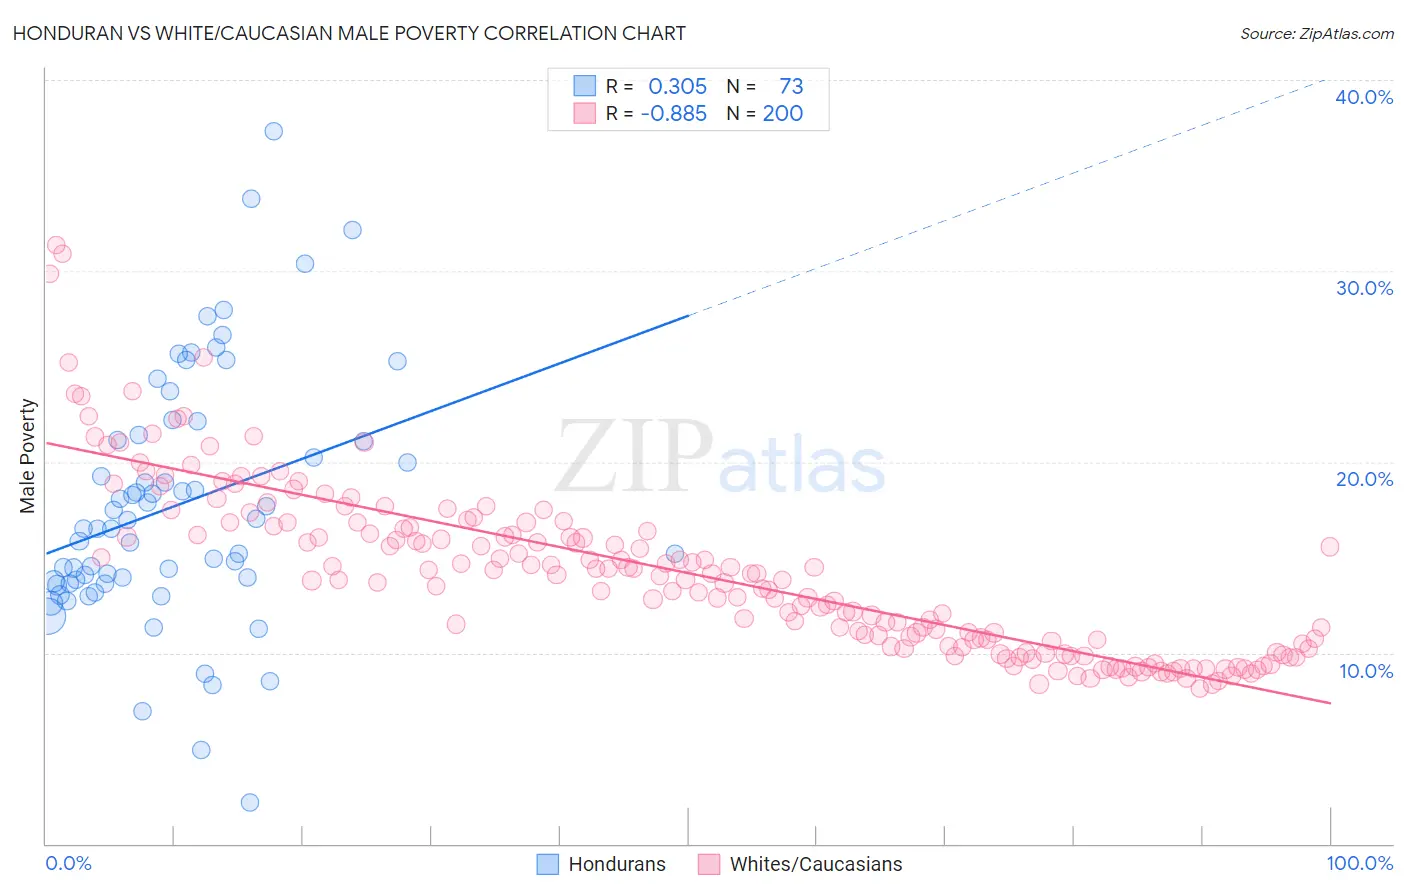 Honduran vs White/Caucasian Male Poverty